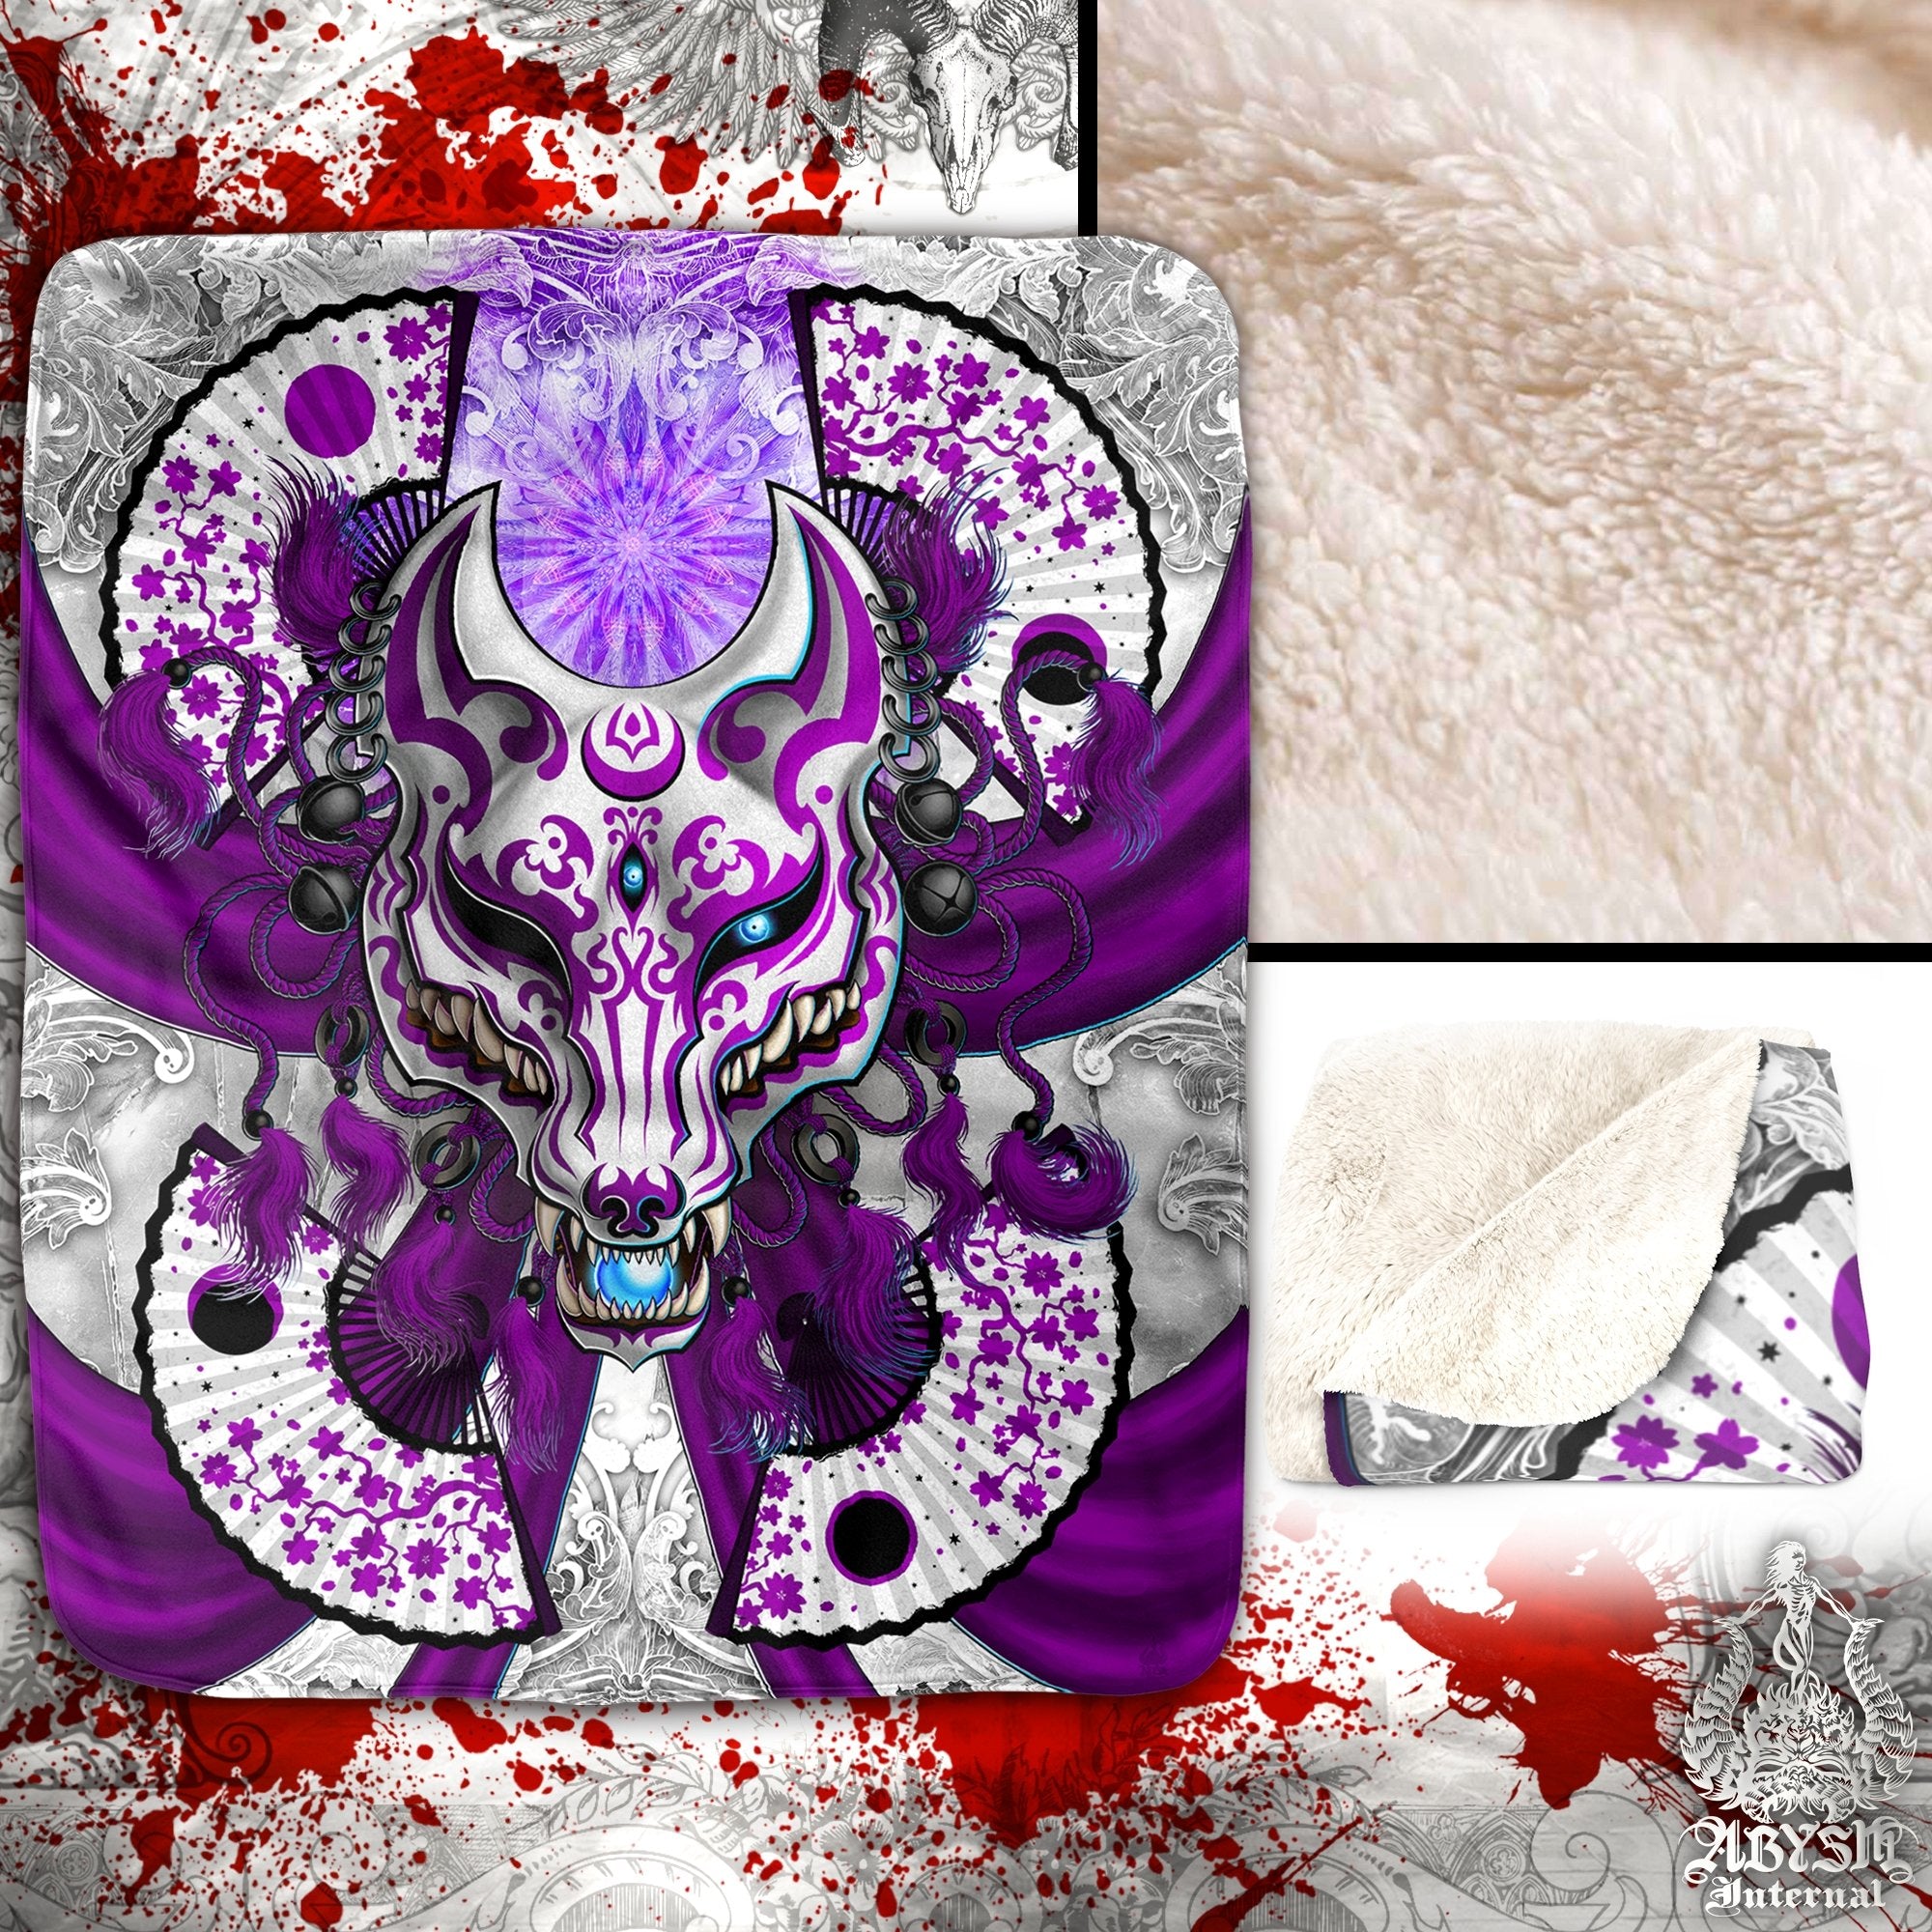 Kitsune Throw Fleece Blanket, Okami, Japanese Fox Mask, Anime and Gamer Decor - White Goth, Purple - Abysm Internal